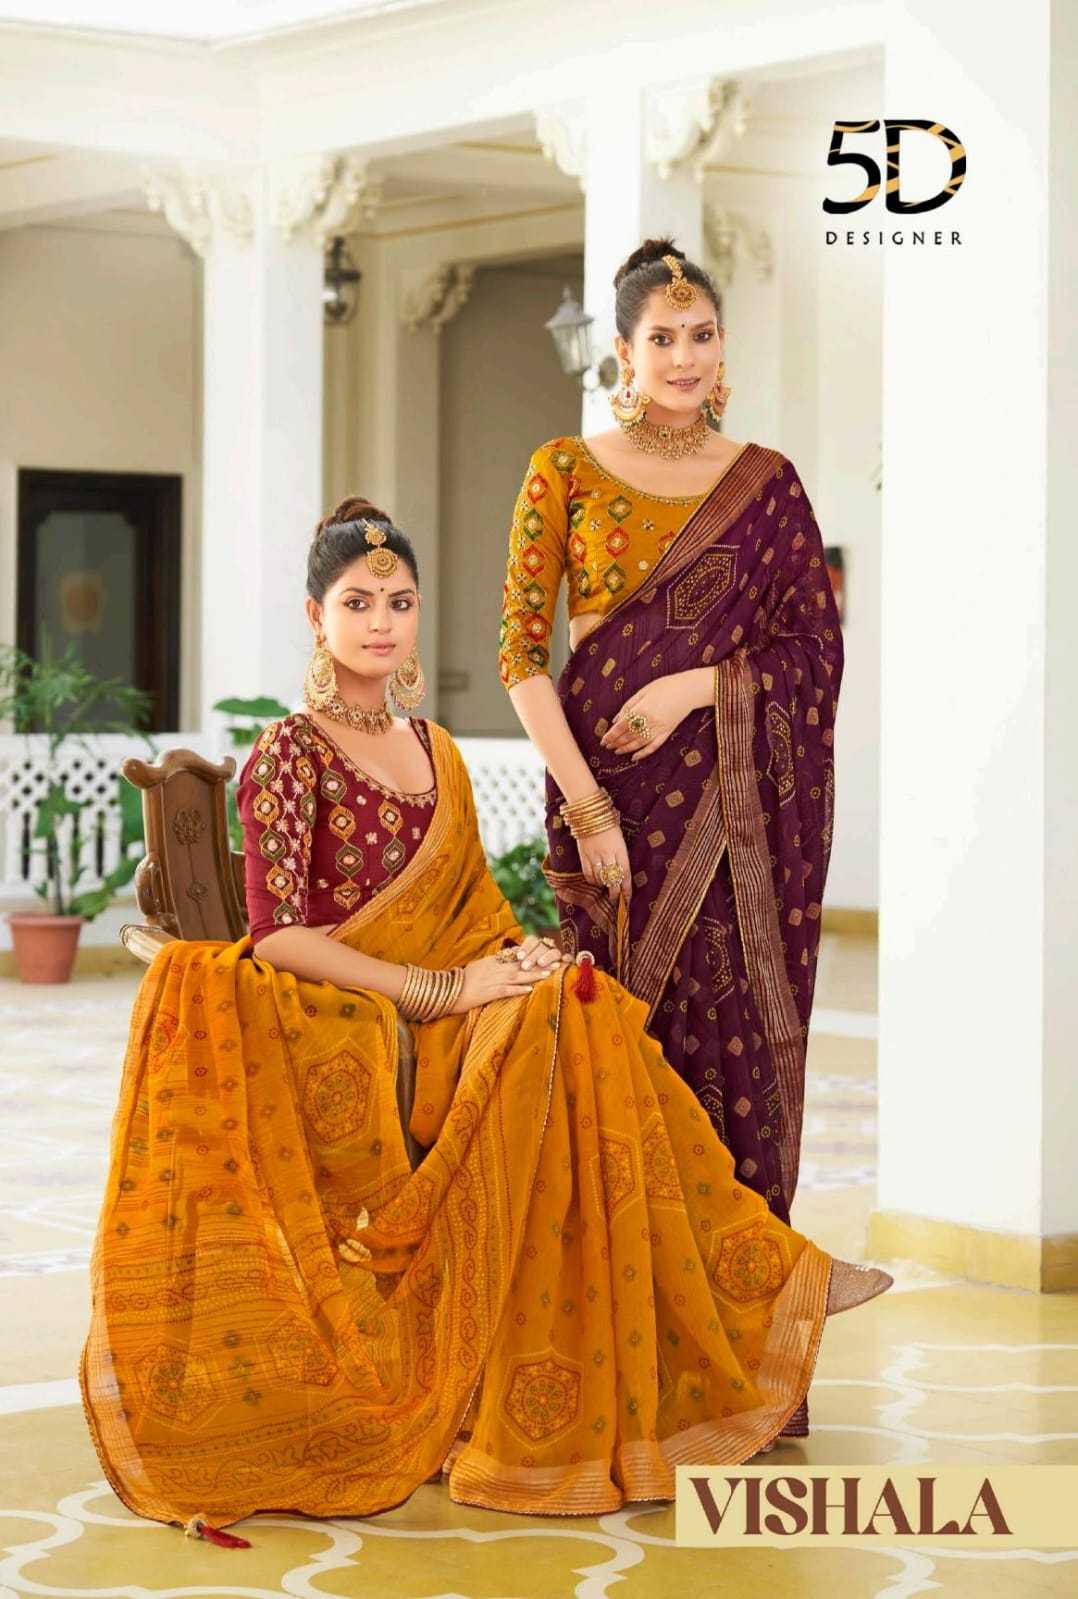 5d designer vishala beautiful chiffon sarees trader